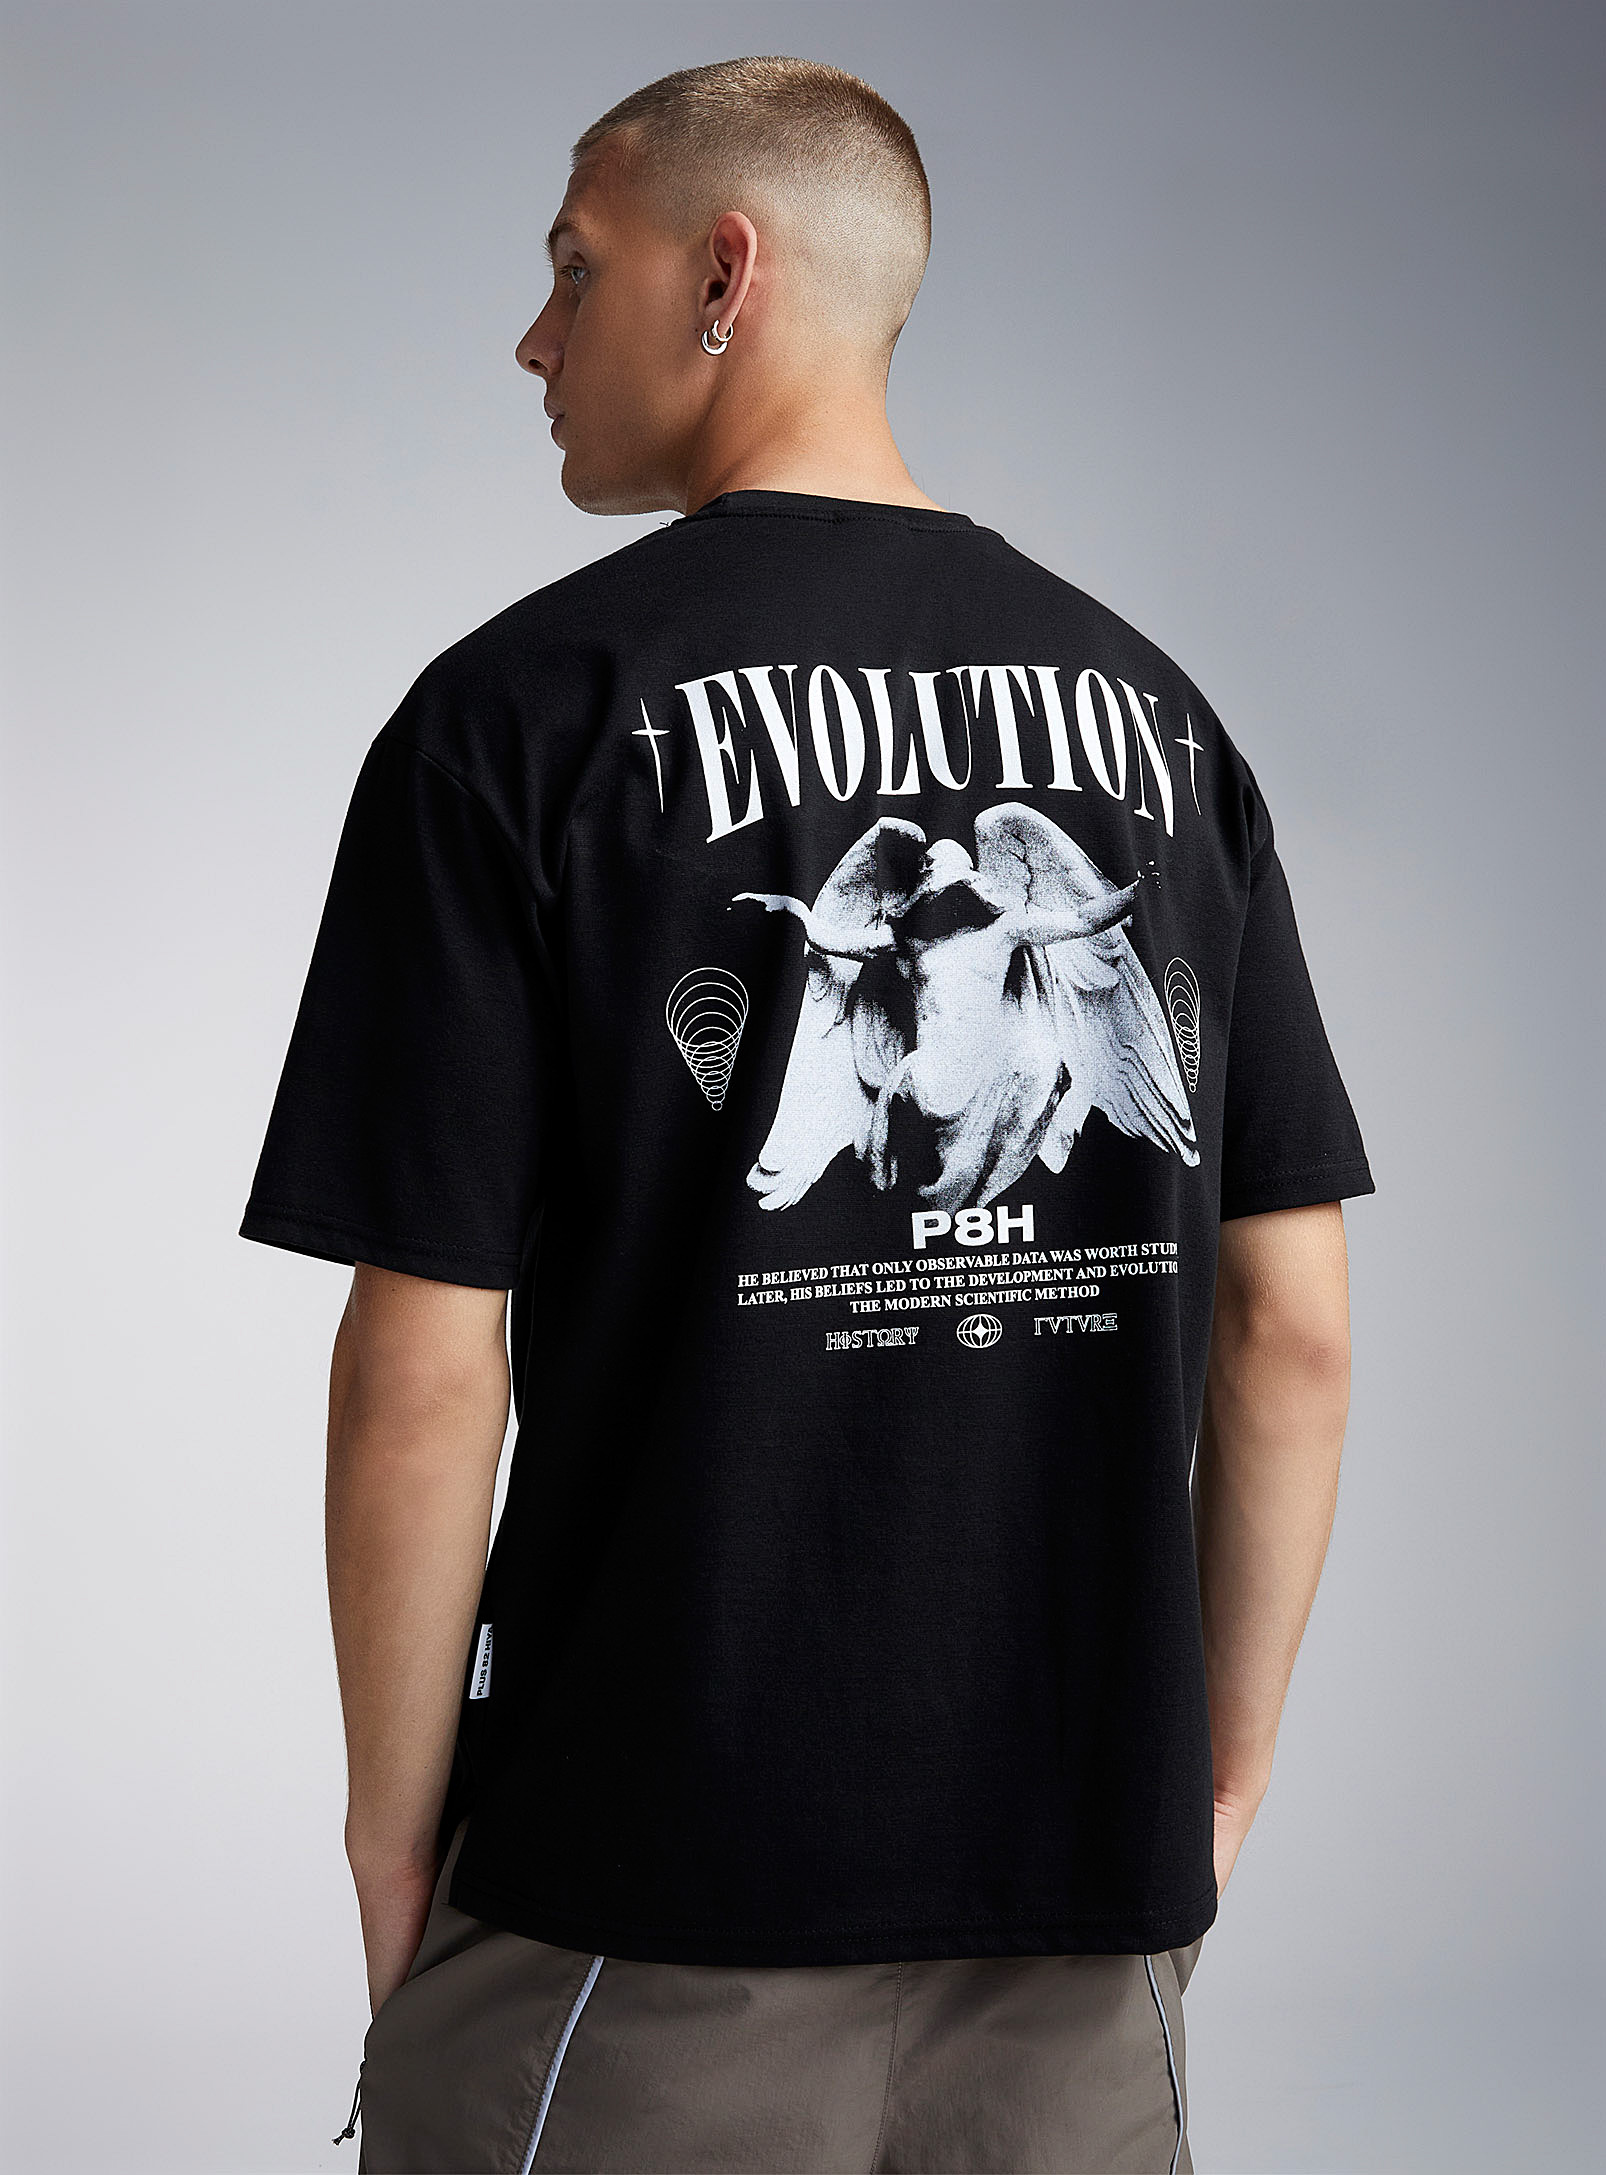 PLUS 82 HIYA - Men's Evolution stone angel T-shirt